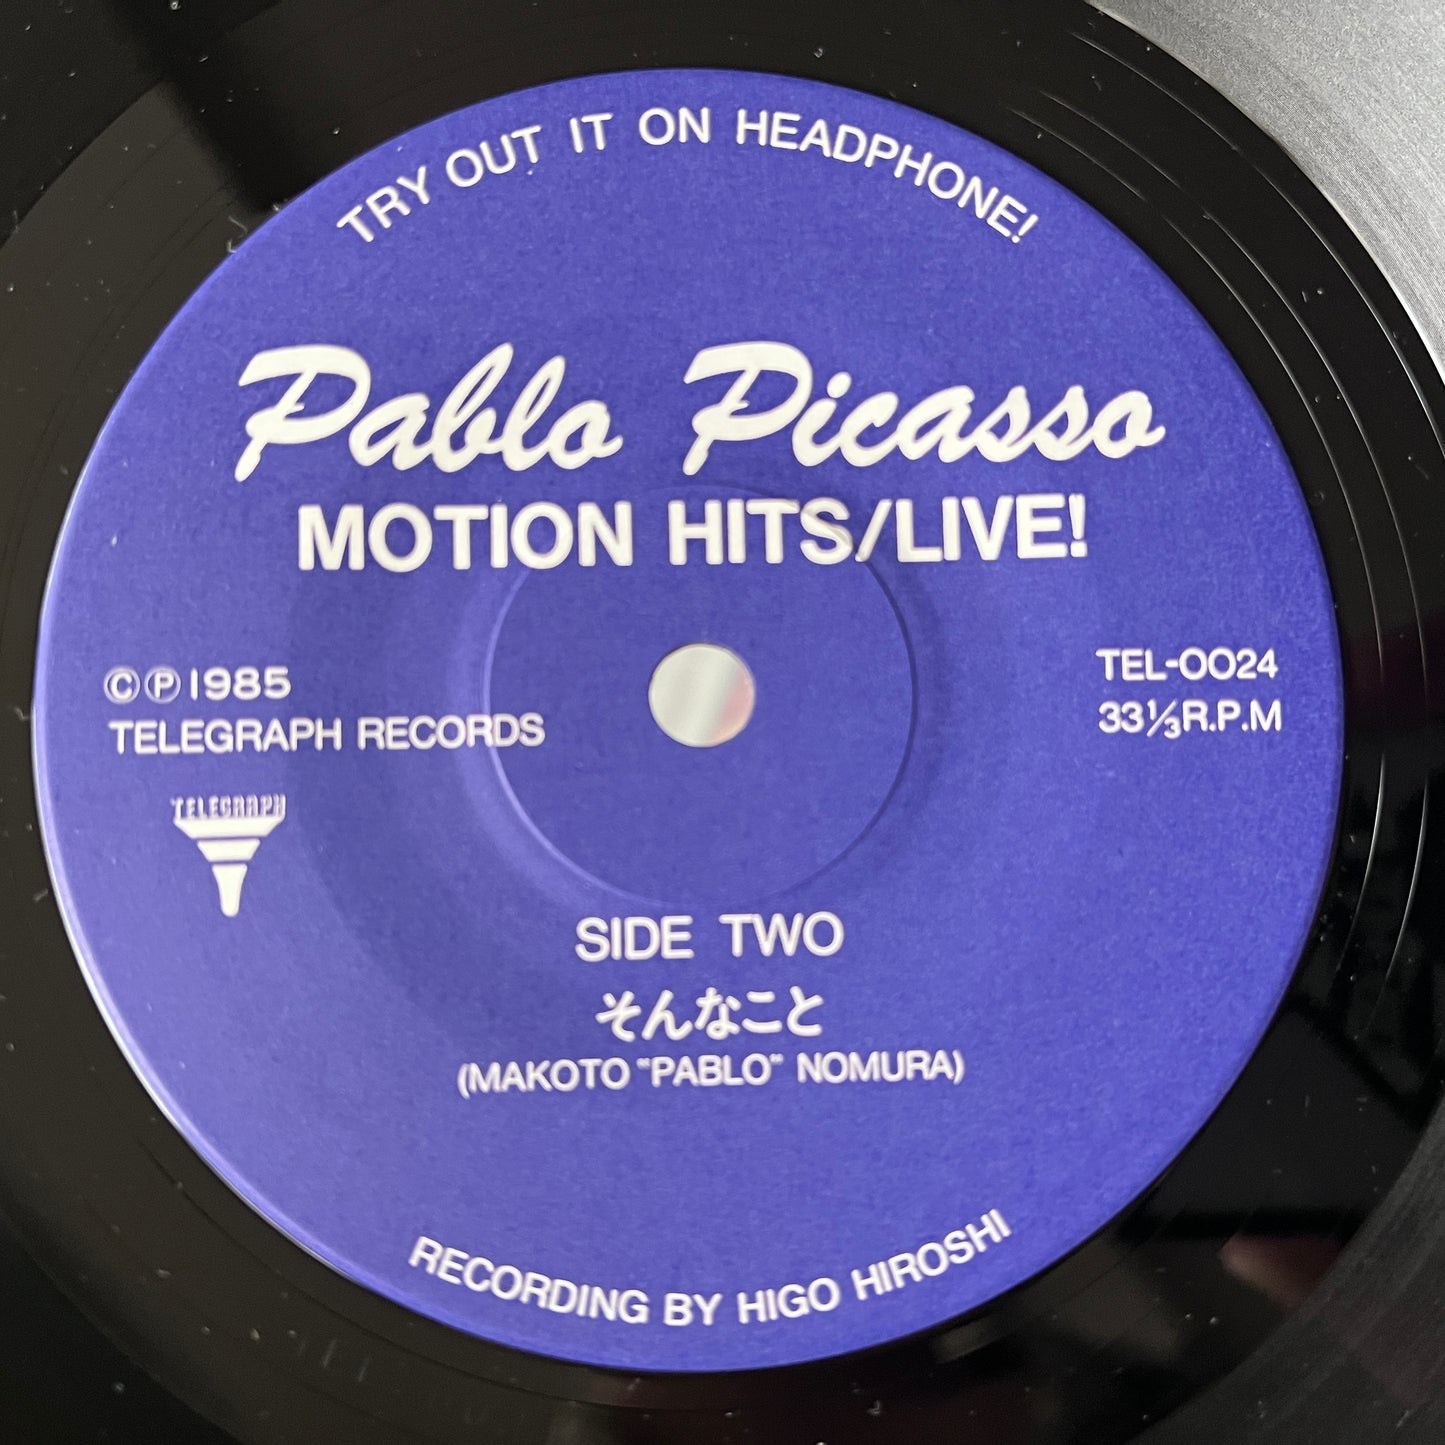 Pablo Picasso - Motion Hits/Live!